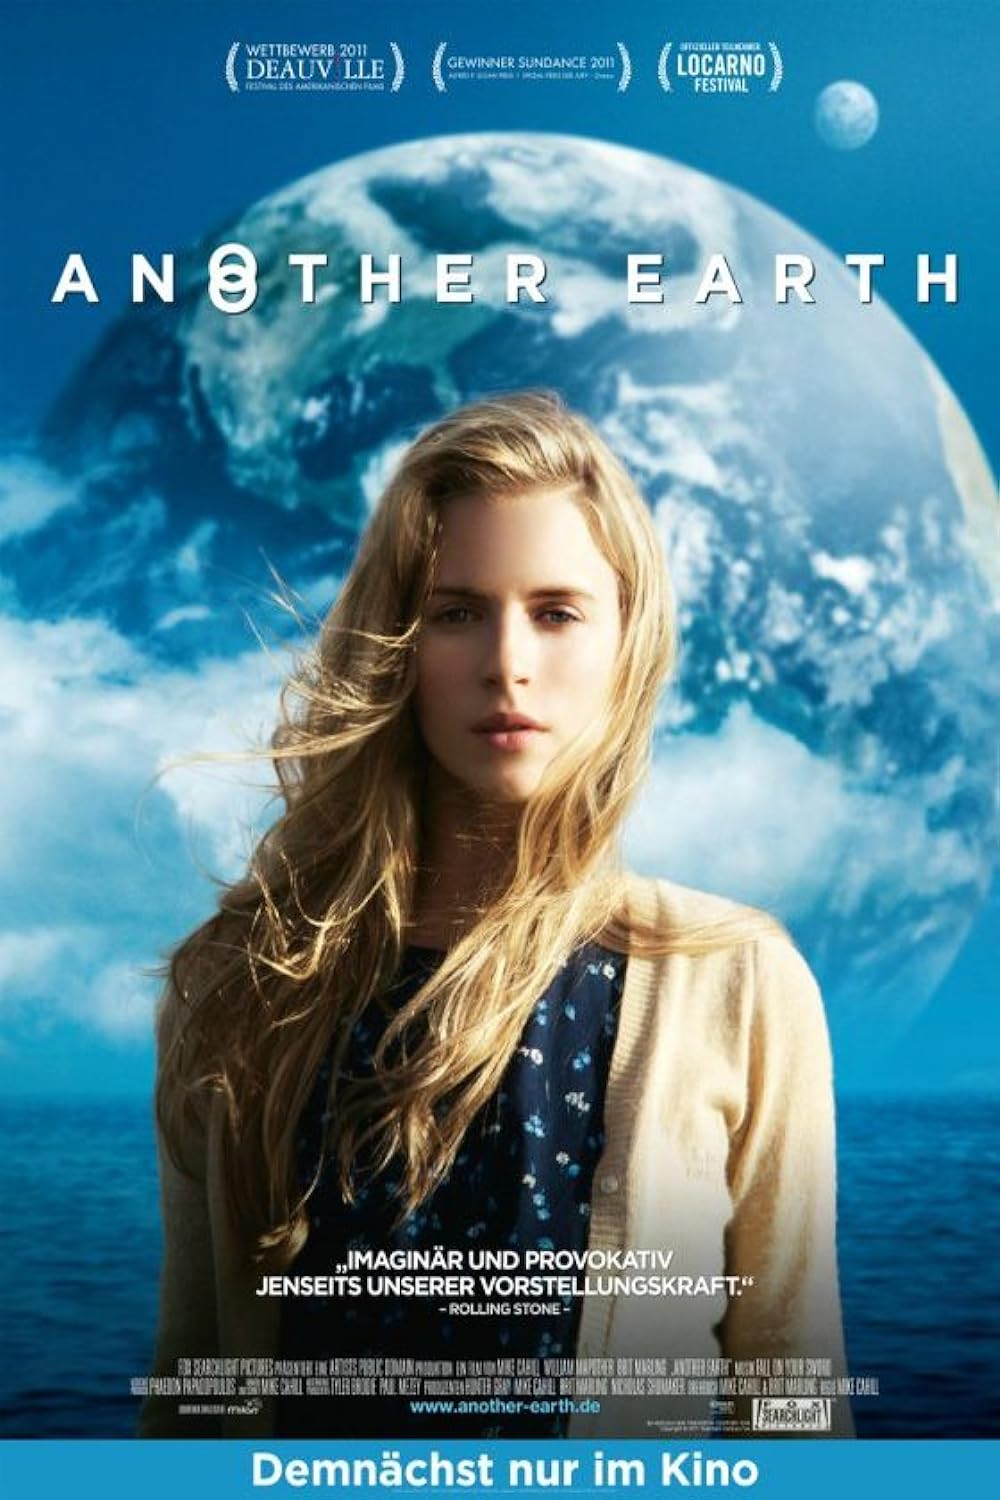 دانلود فیلم Another Earth 2011